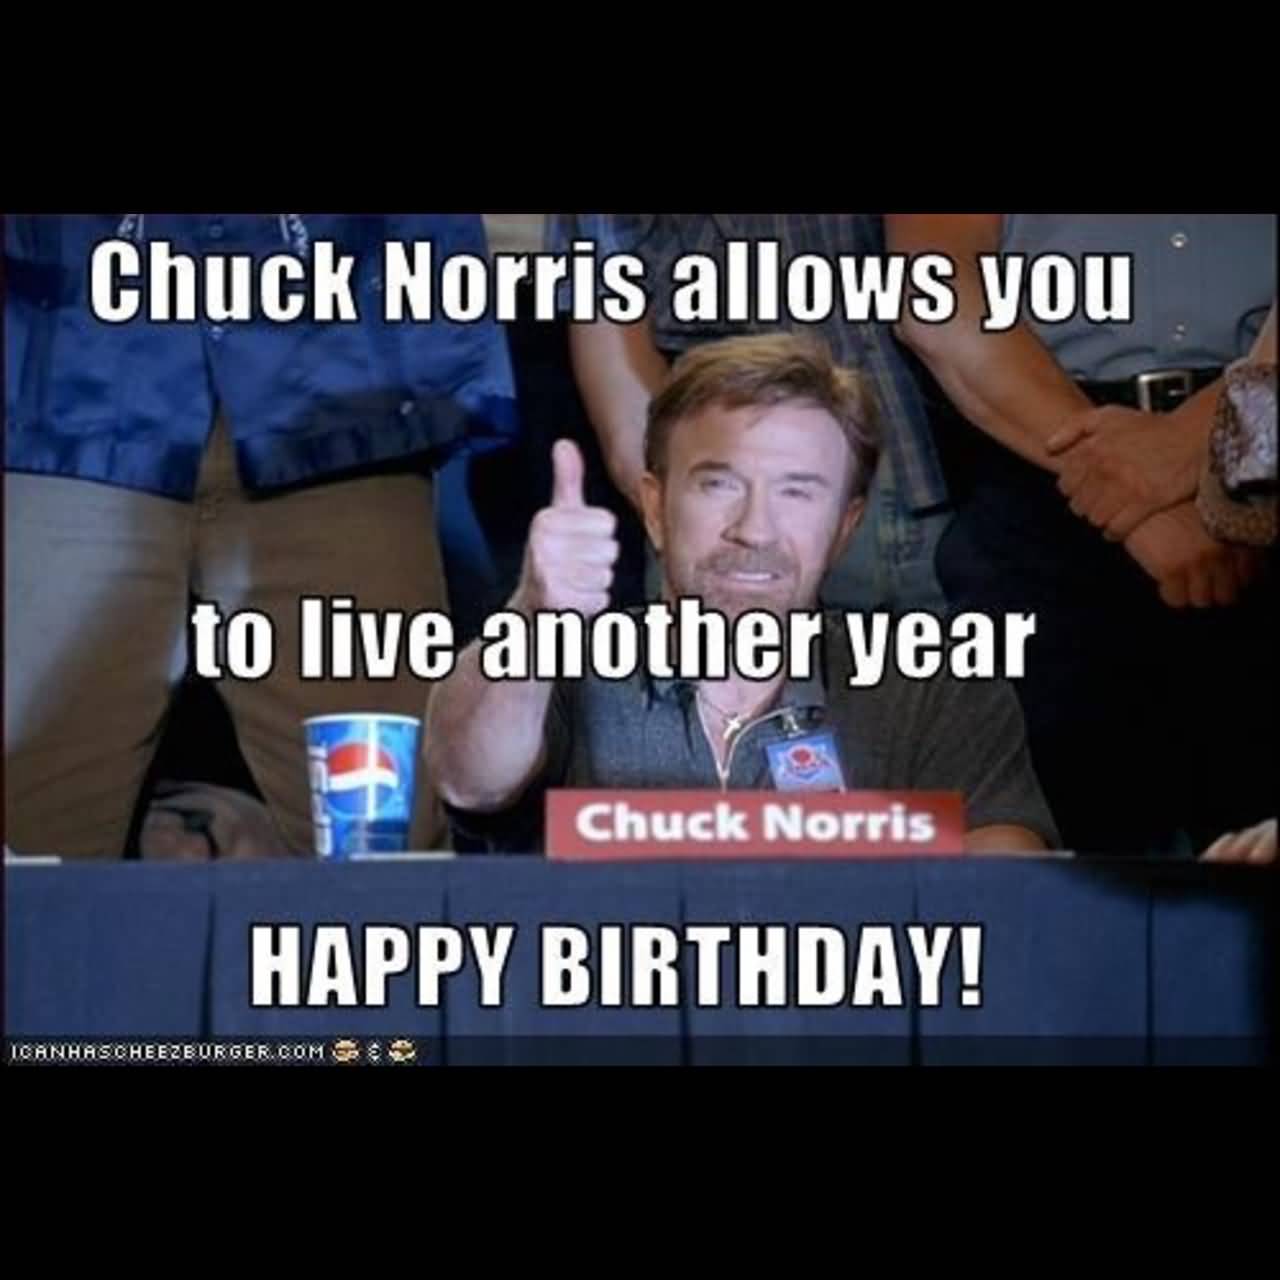 Chuck Norris Happy Birthday Meme Funny Image Photo Joke 09